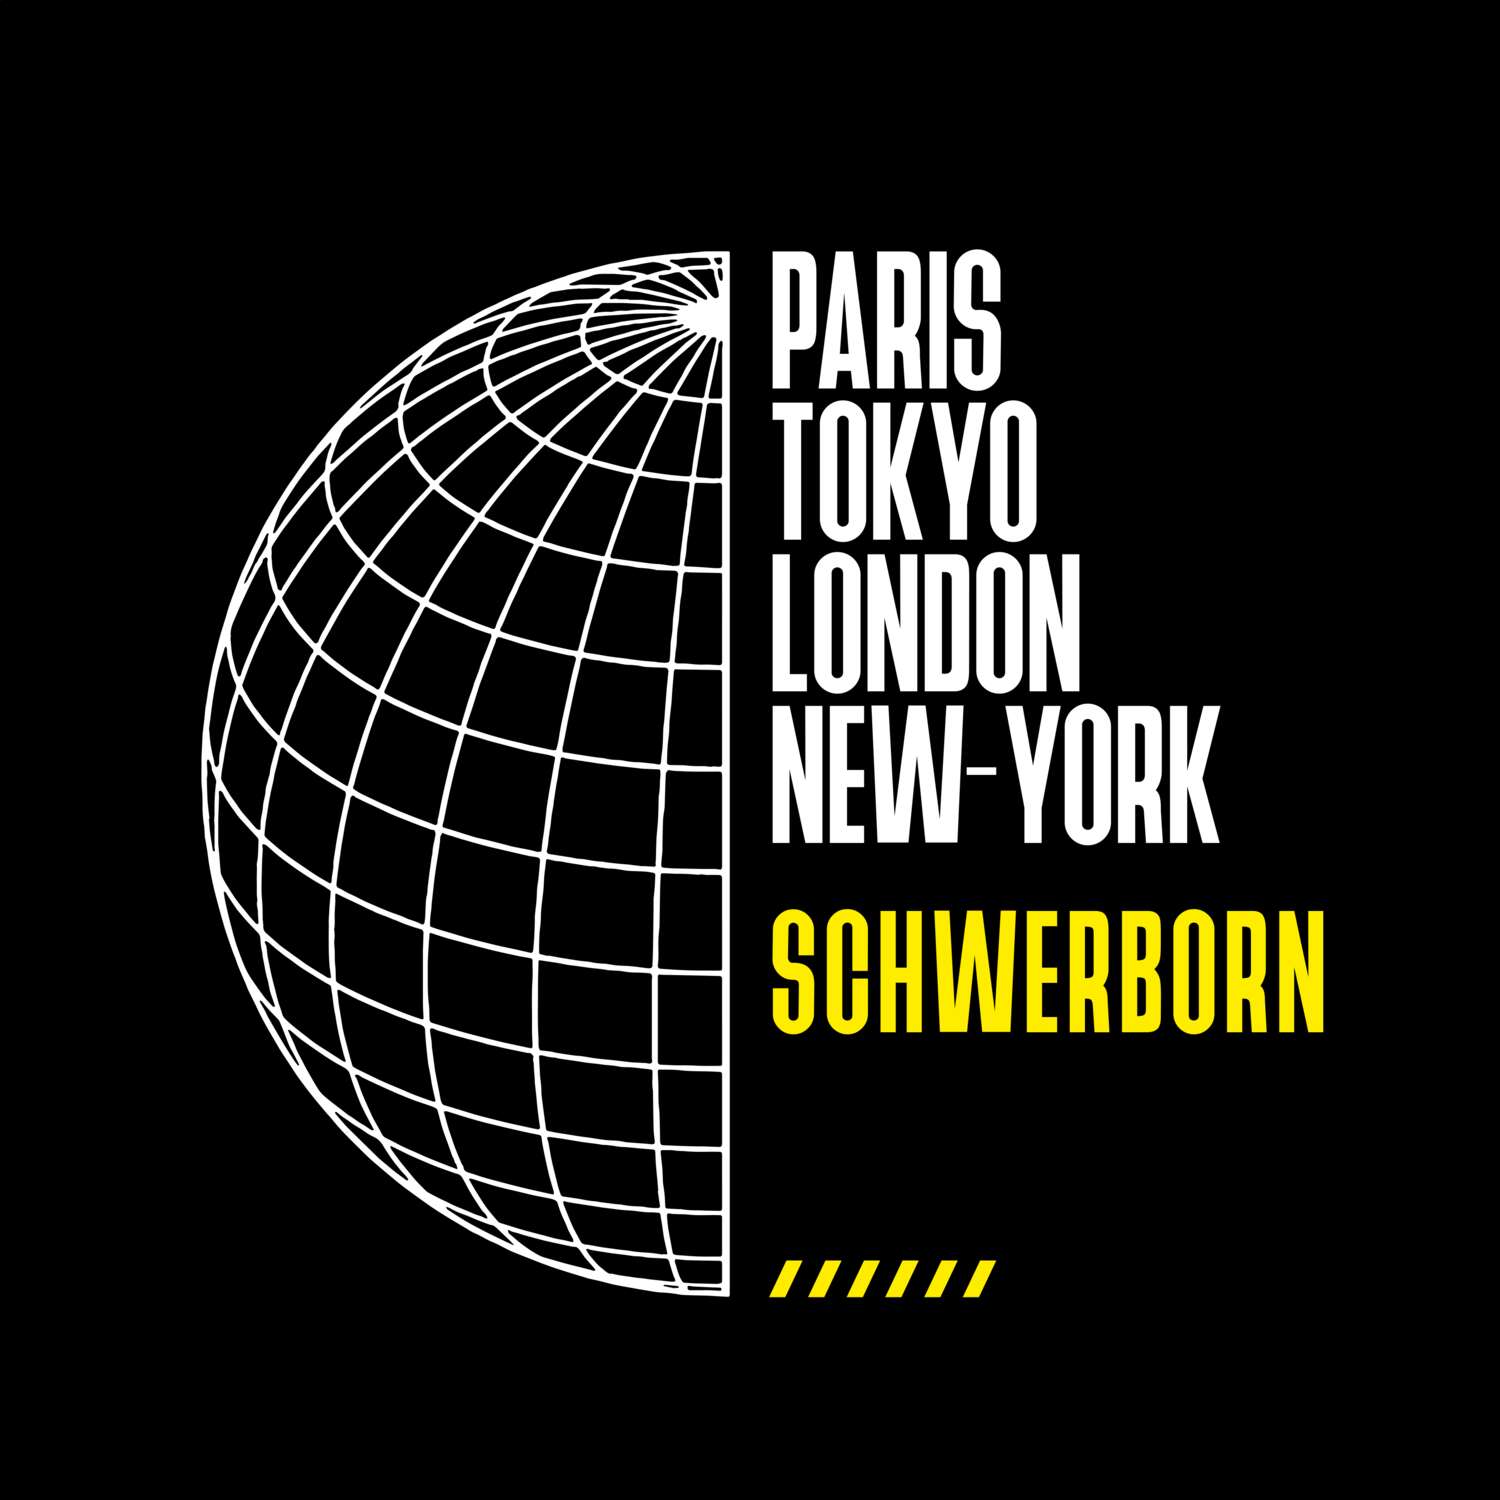 Schwerborn T-Shirt »Paris Tokyo London«